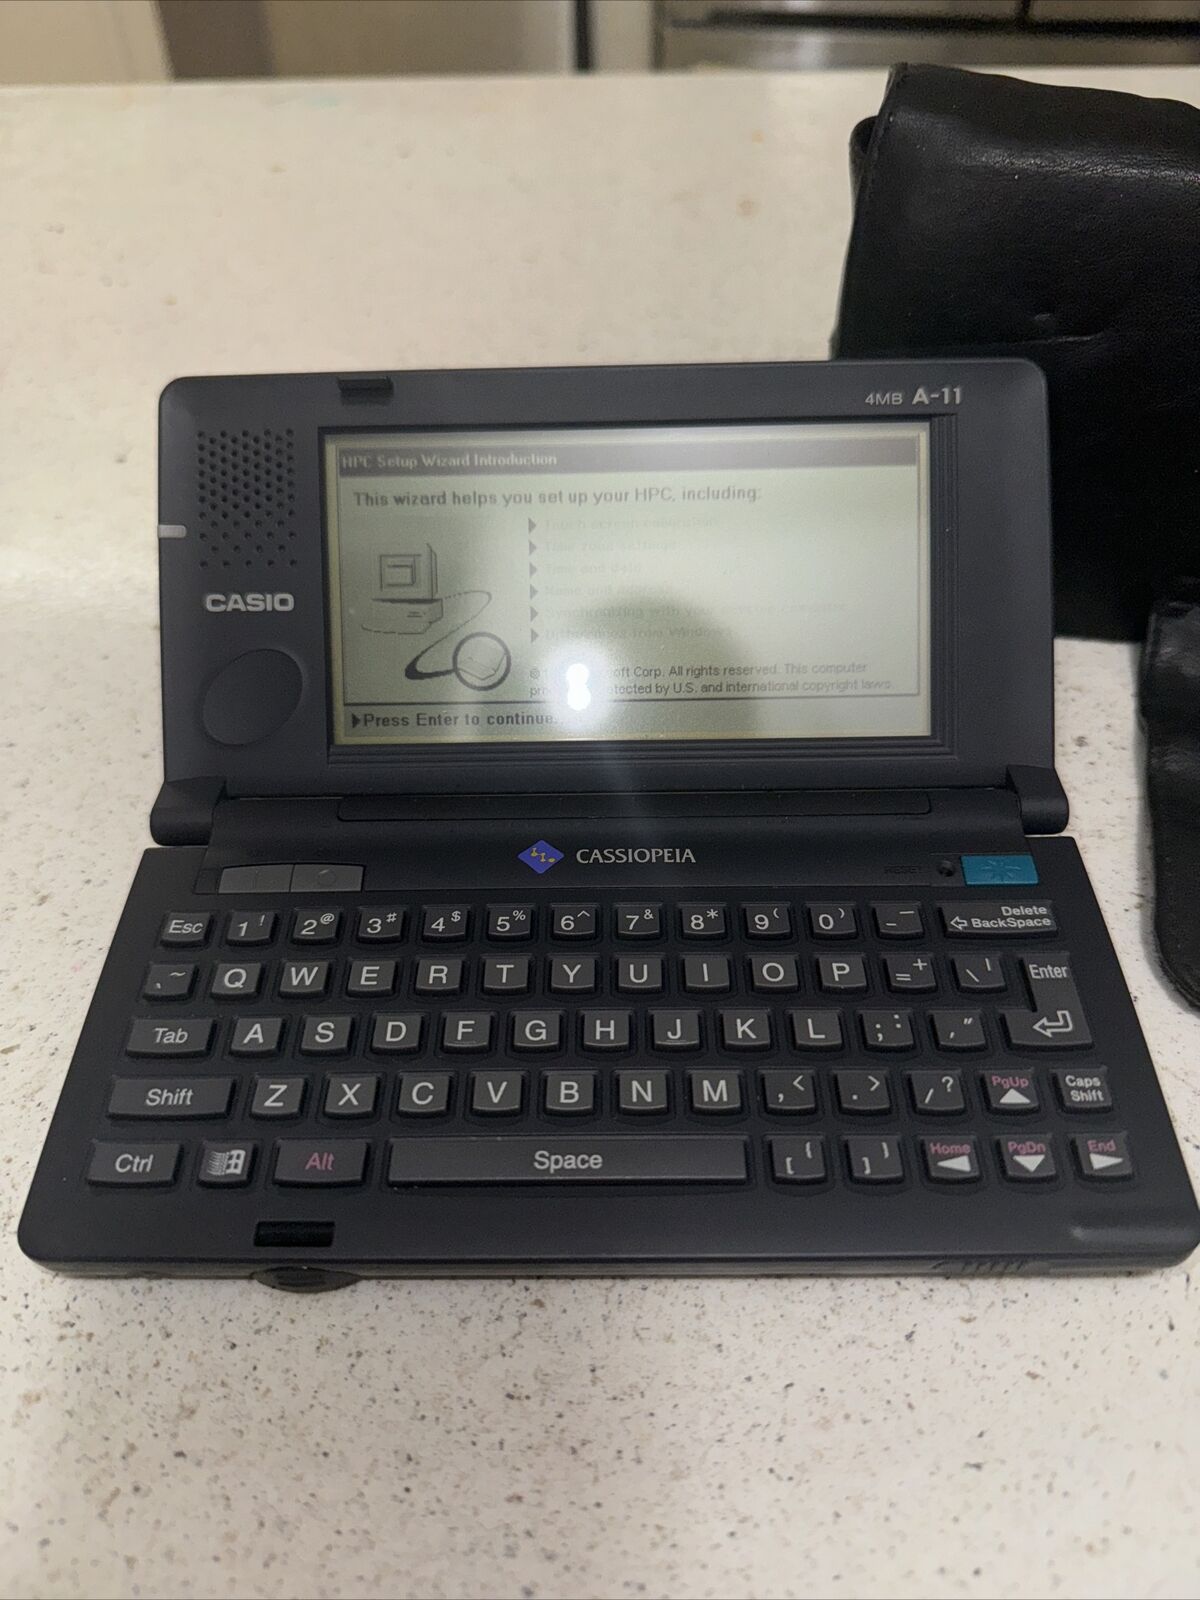 Cassiopeia A-11 4MB - RARE Vintage PDA / Pocket Computer - Casio - Windows CE